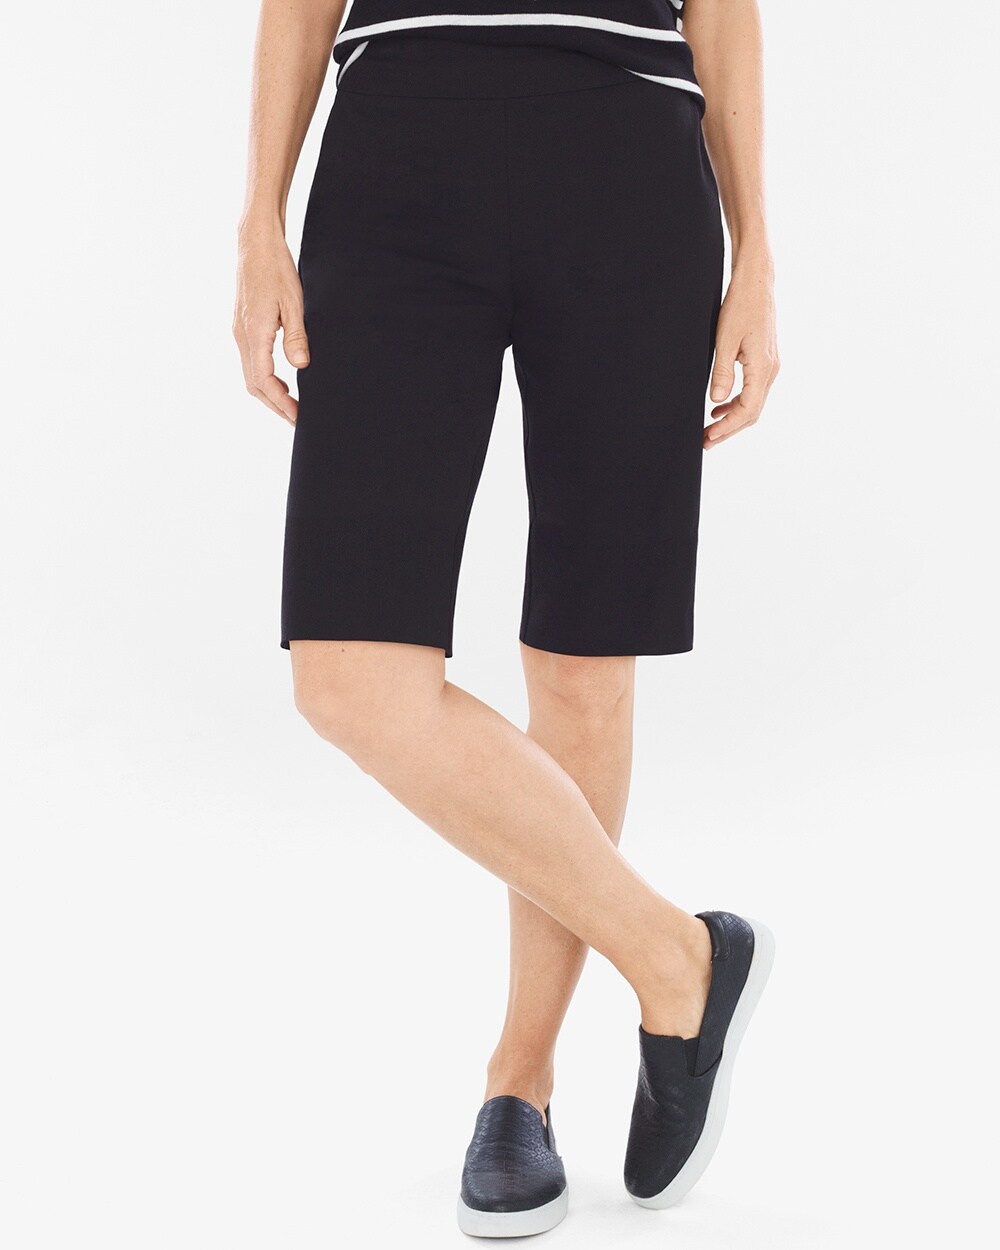 So Slimming Brigitte Bermuda Shorts- 13 Inch Inseam